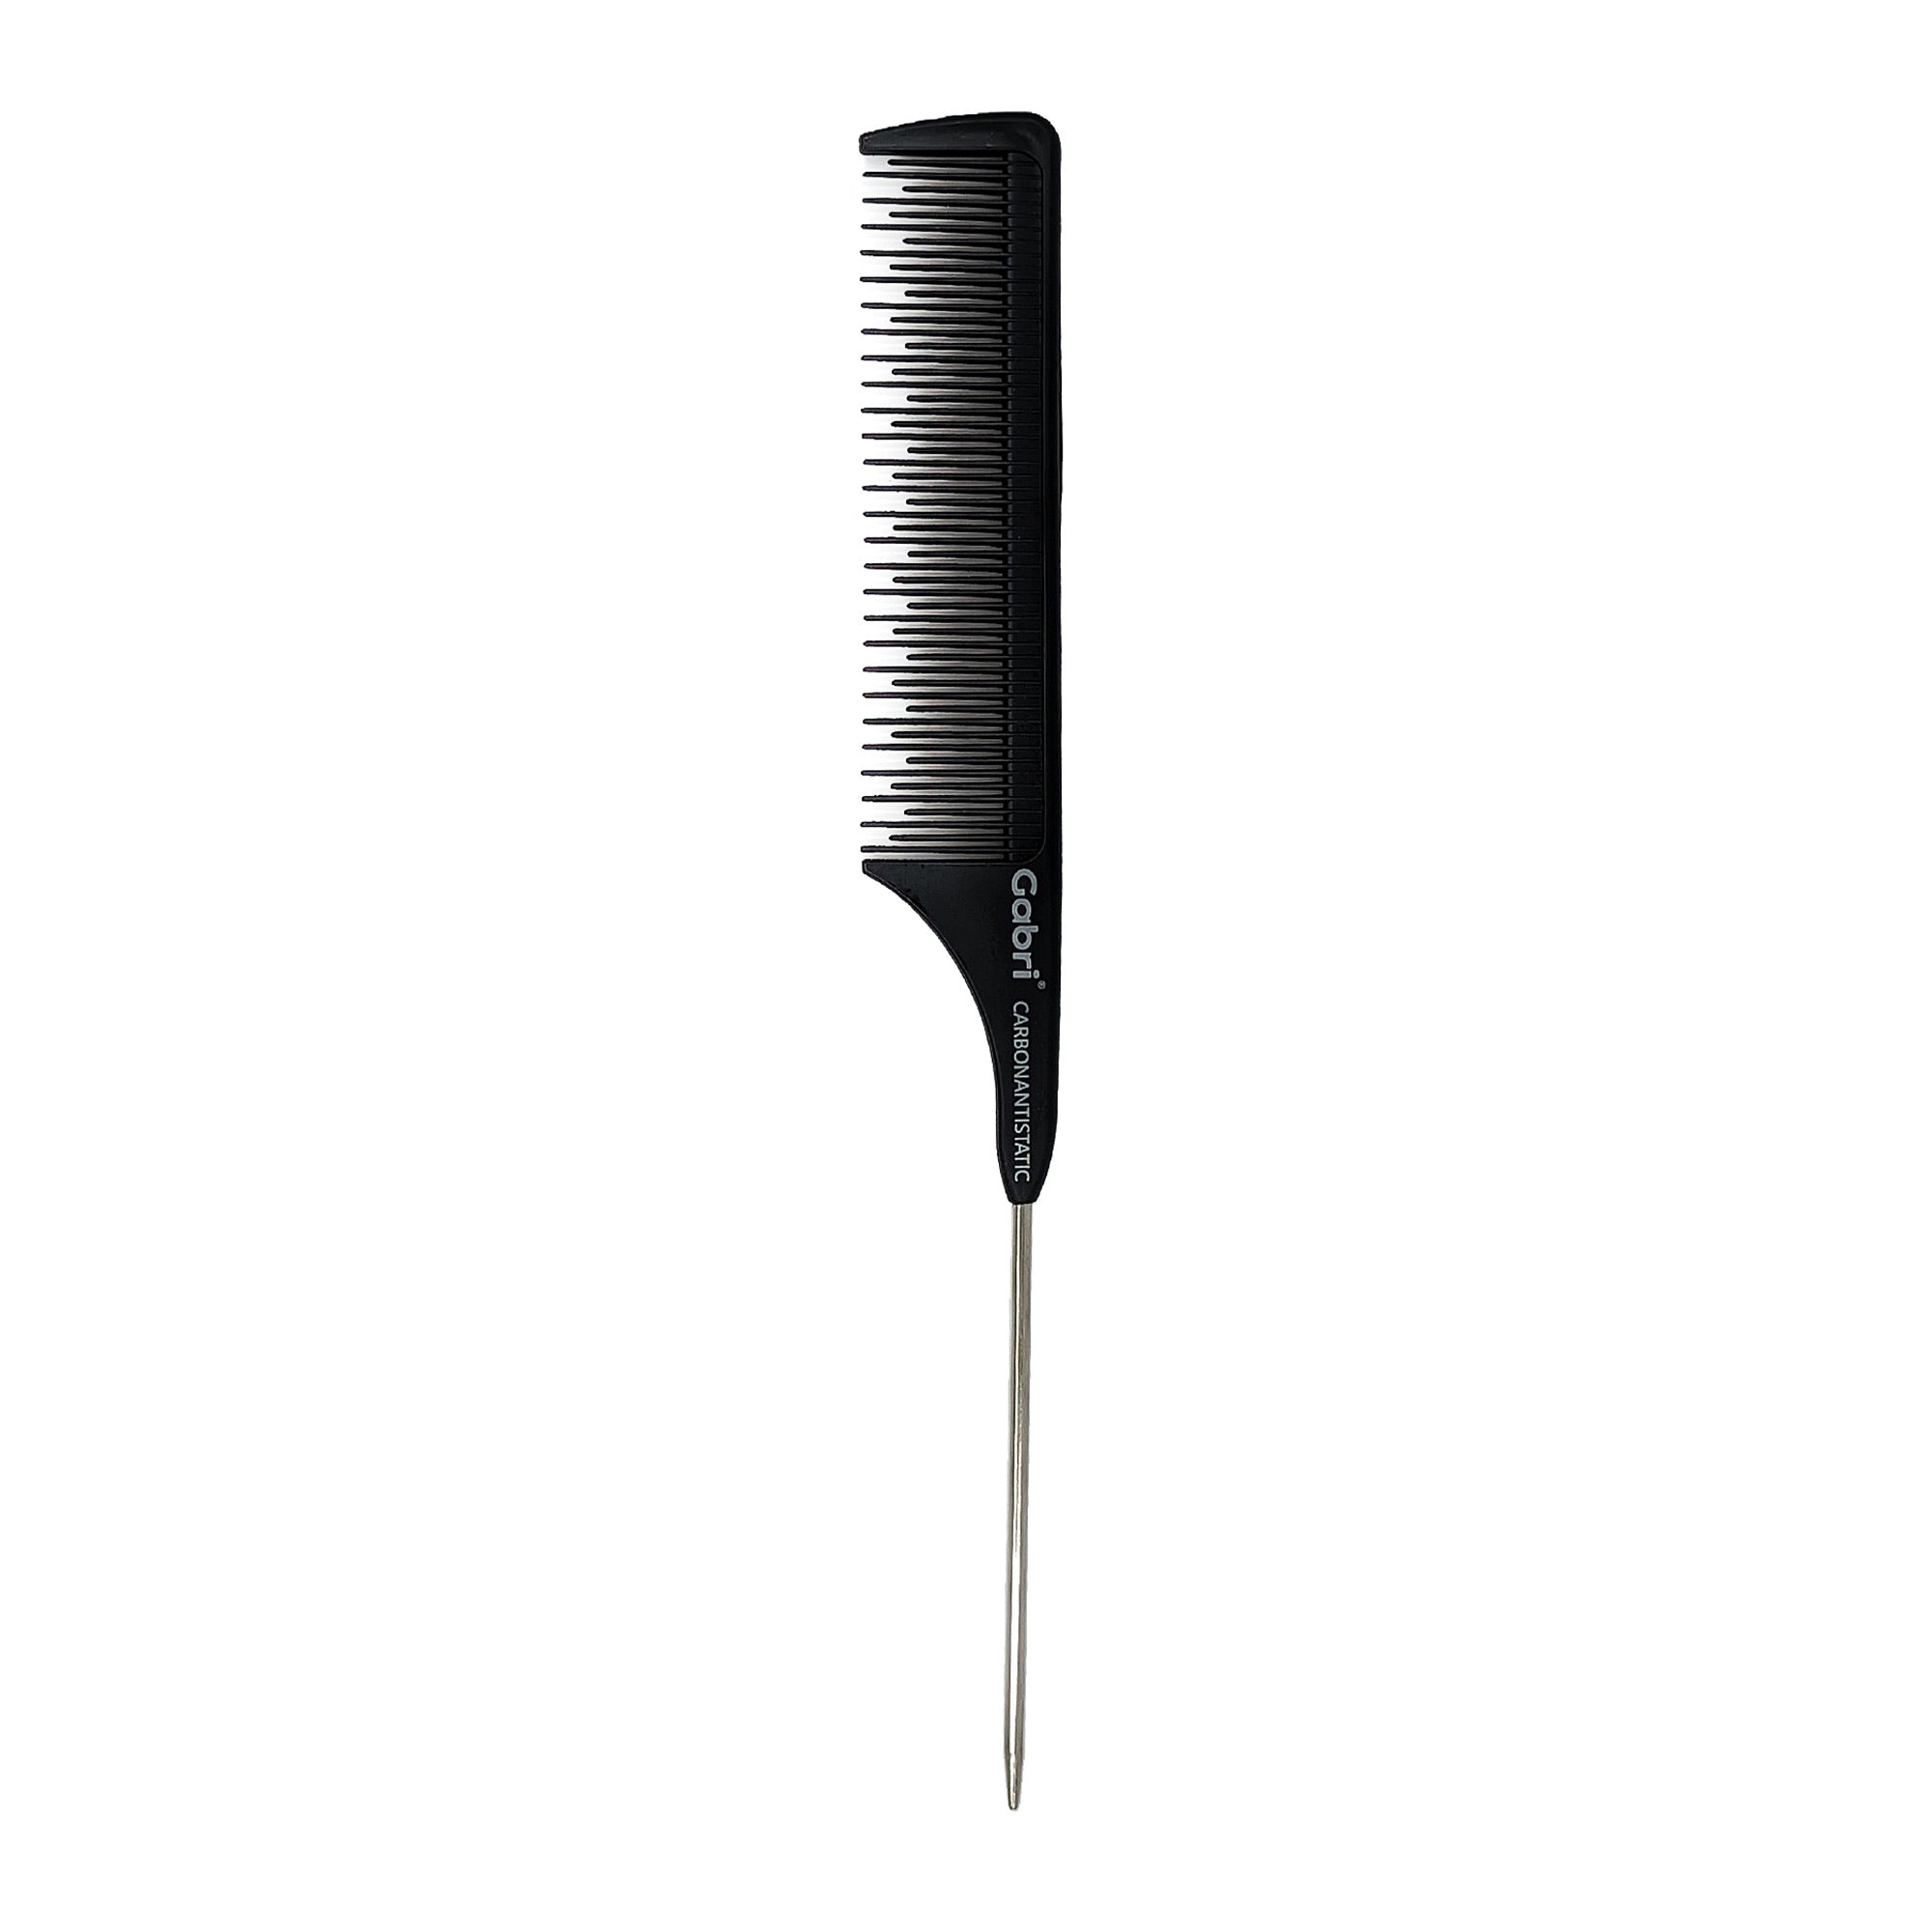 Gabri - Pin Tail Comb Tease Fine Tooth No.32 23cm